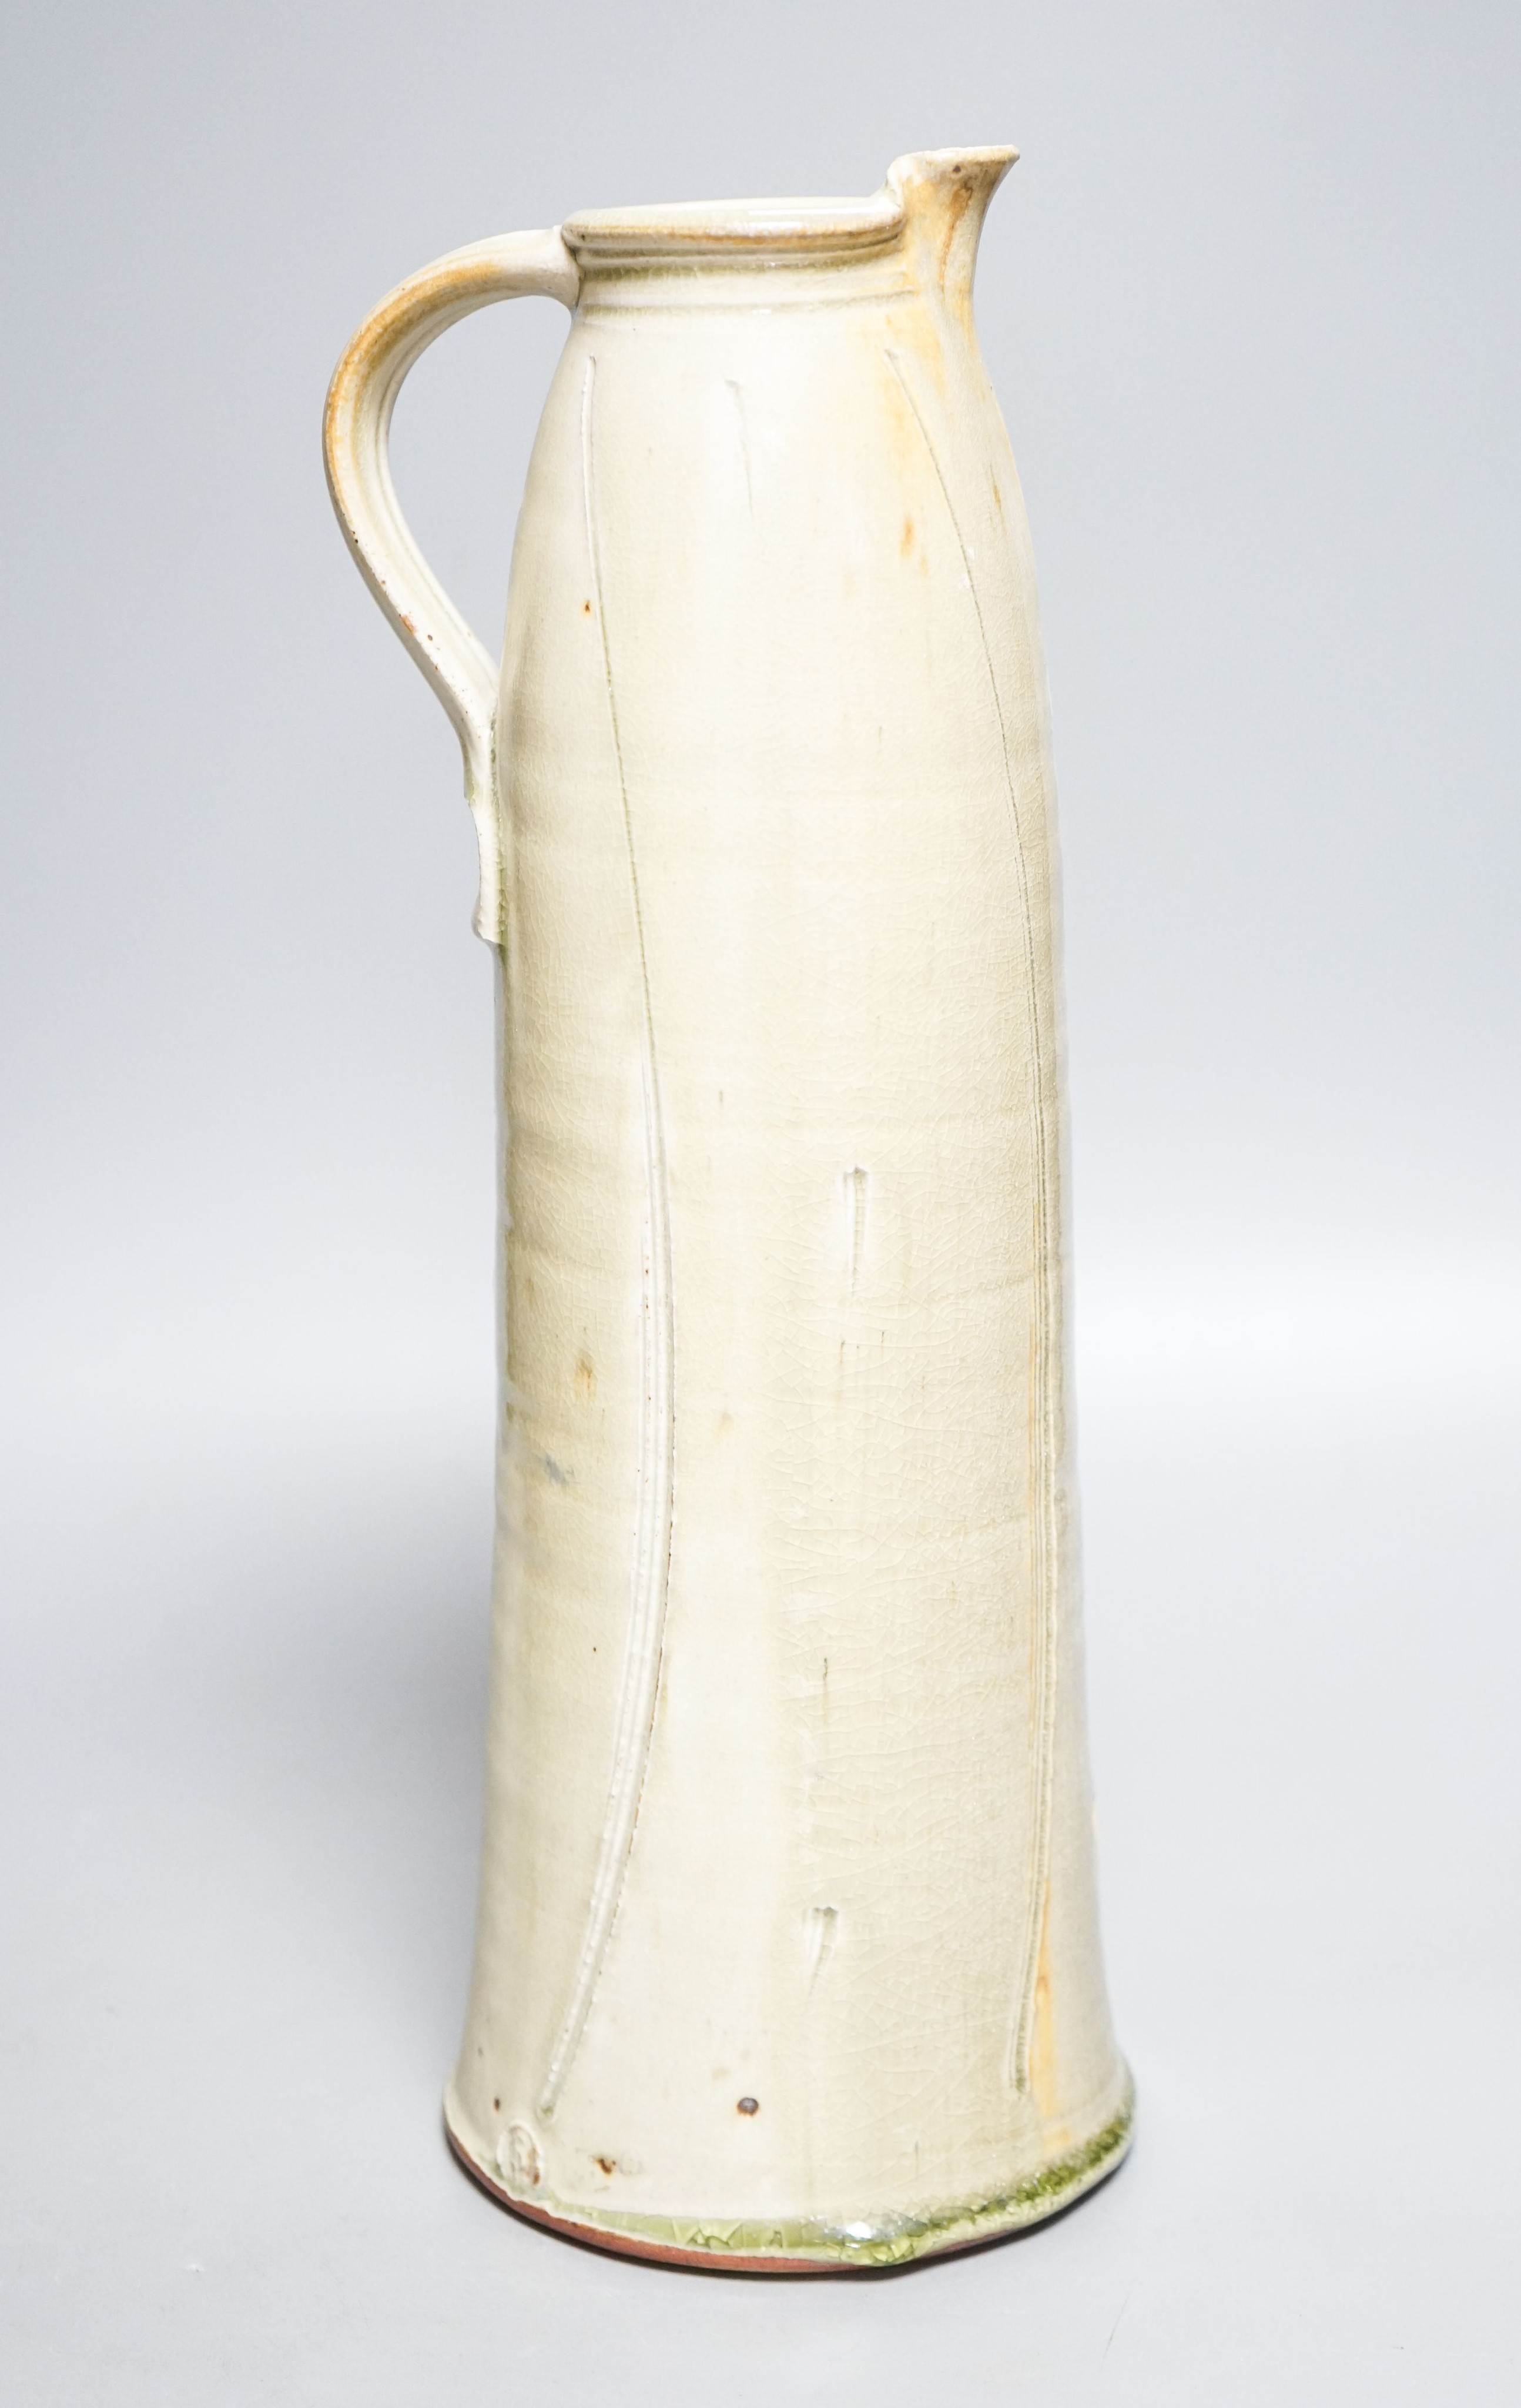 Stephen Parry (b.1950), a tall pale celadon glazed jug 39cm